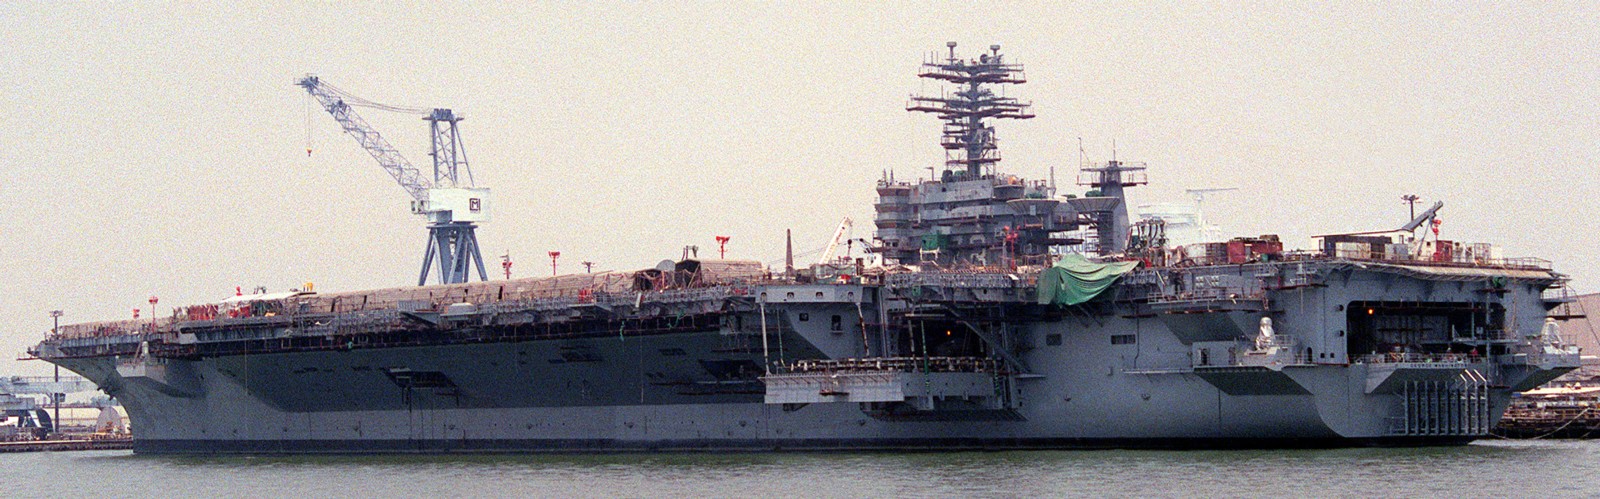 cvn-73 uss george washington nimitz class aircraft carrier us navy newport news shipbuilding 59